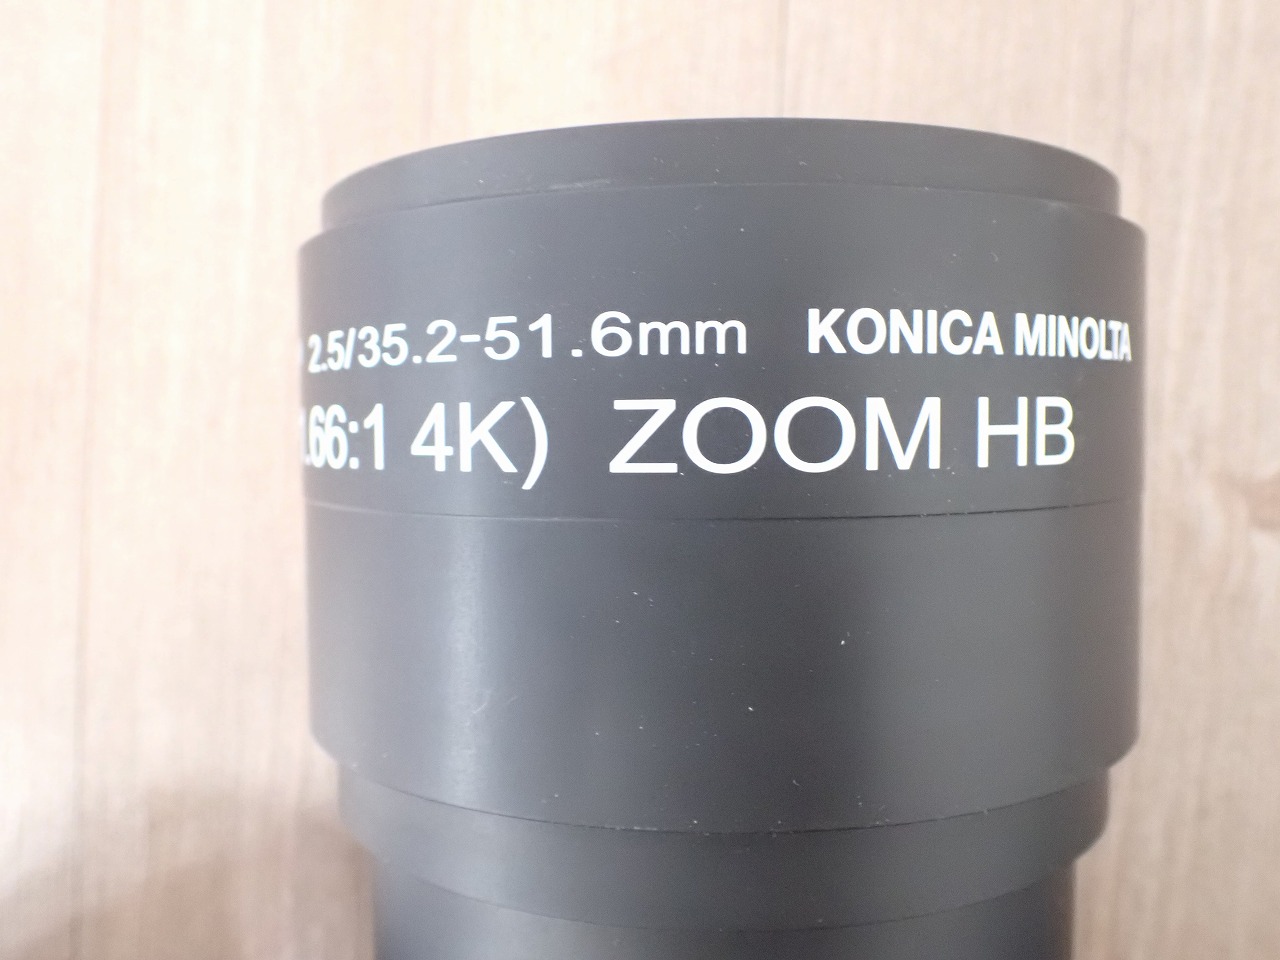 116_5mm-DLP-Cinema-2_5/35_2-51_6mm-1_25-1_83:1(1_13-1_66:1-4K)-ZOOM-HB